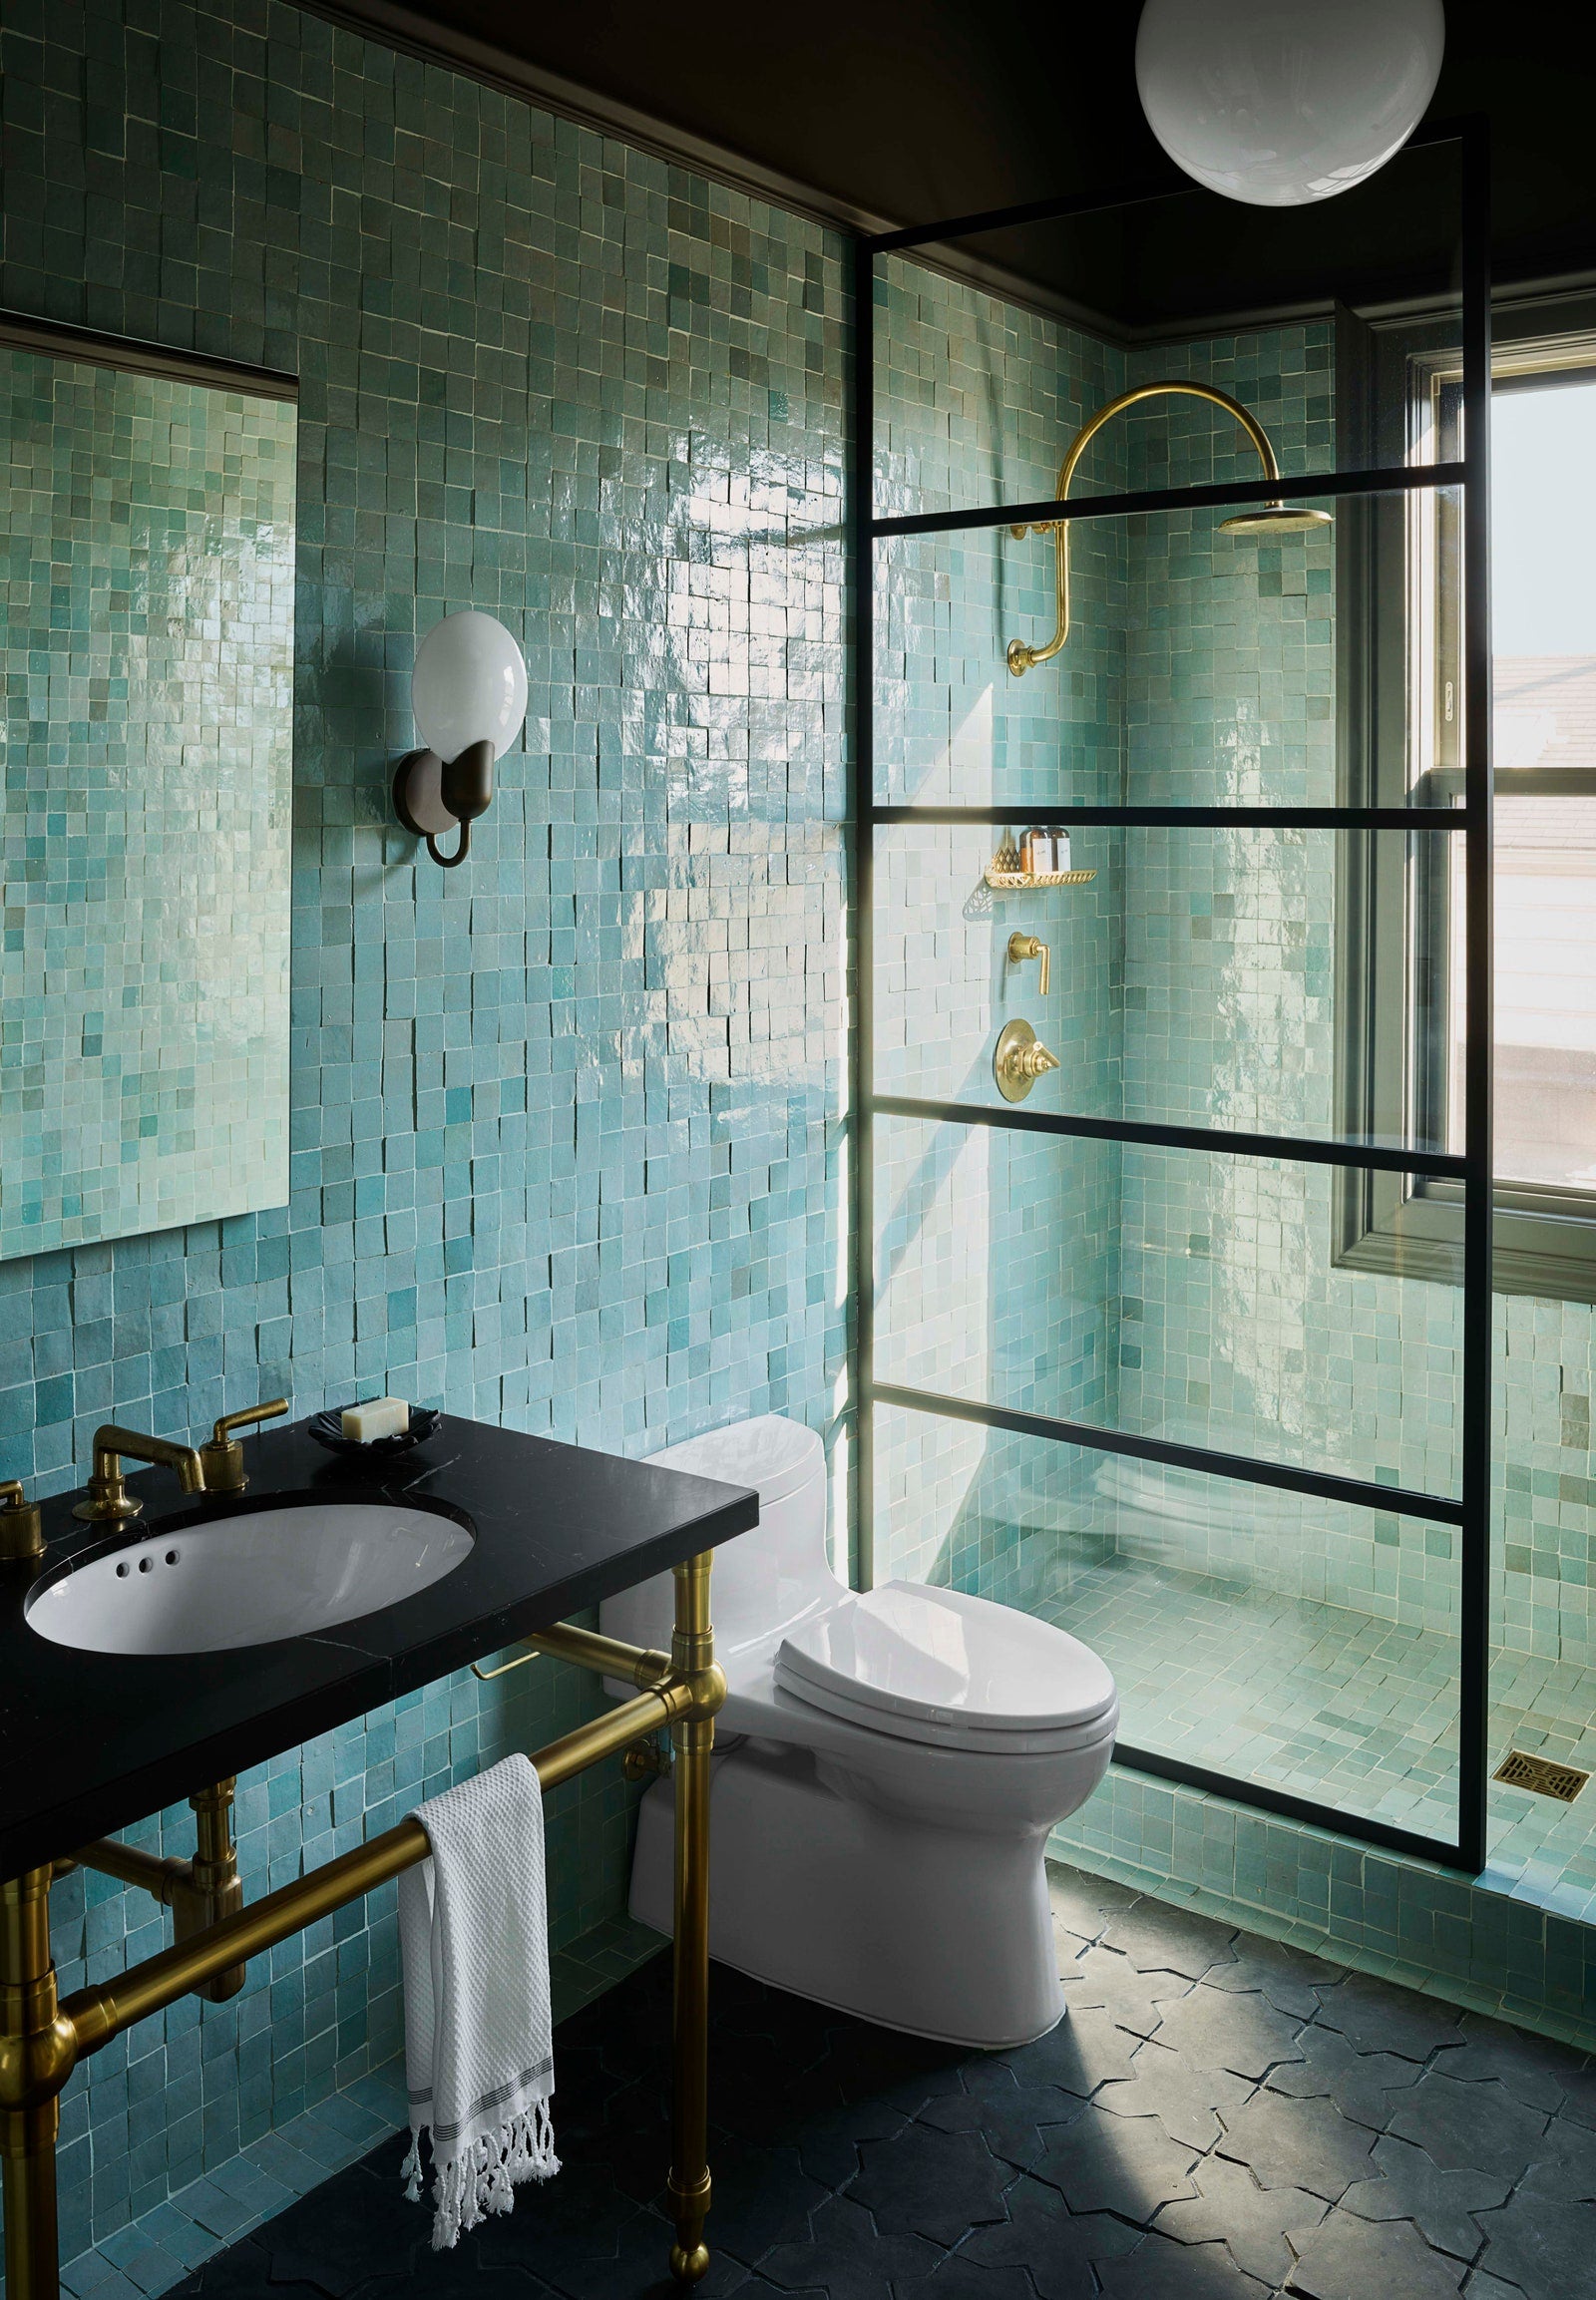 moody bathroom with teal tile walls and dark tile flooring